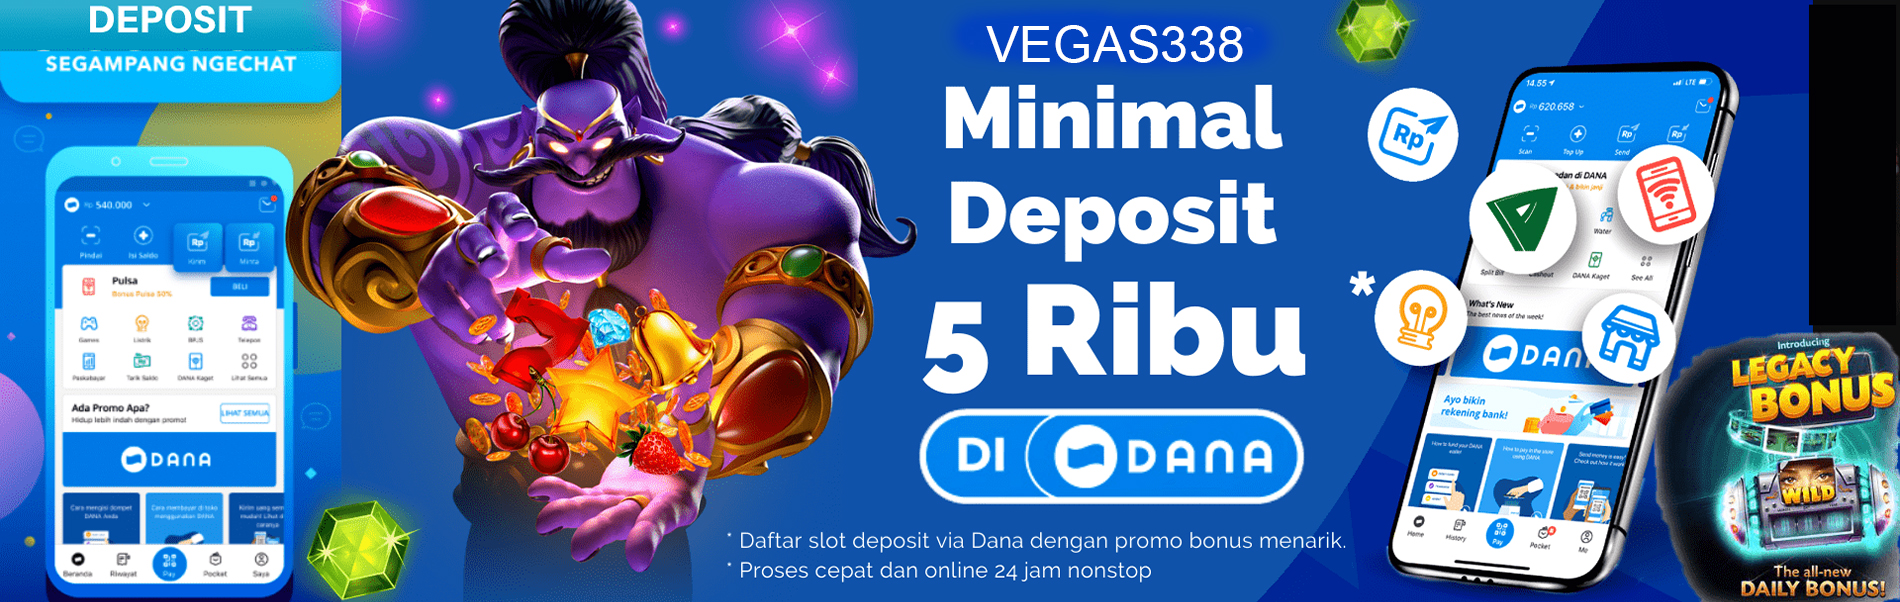 Situs Slot Deposit Dana Rp5000 - Agen Slot Gacor